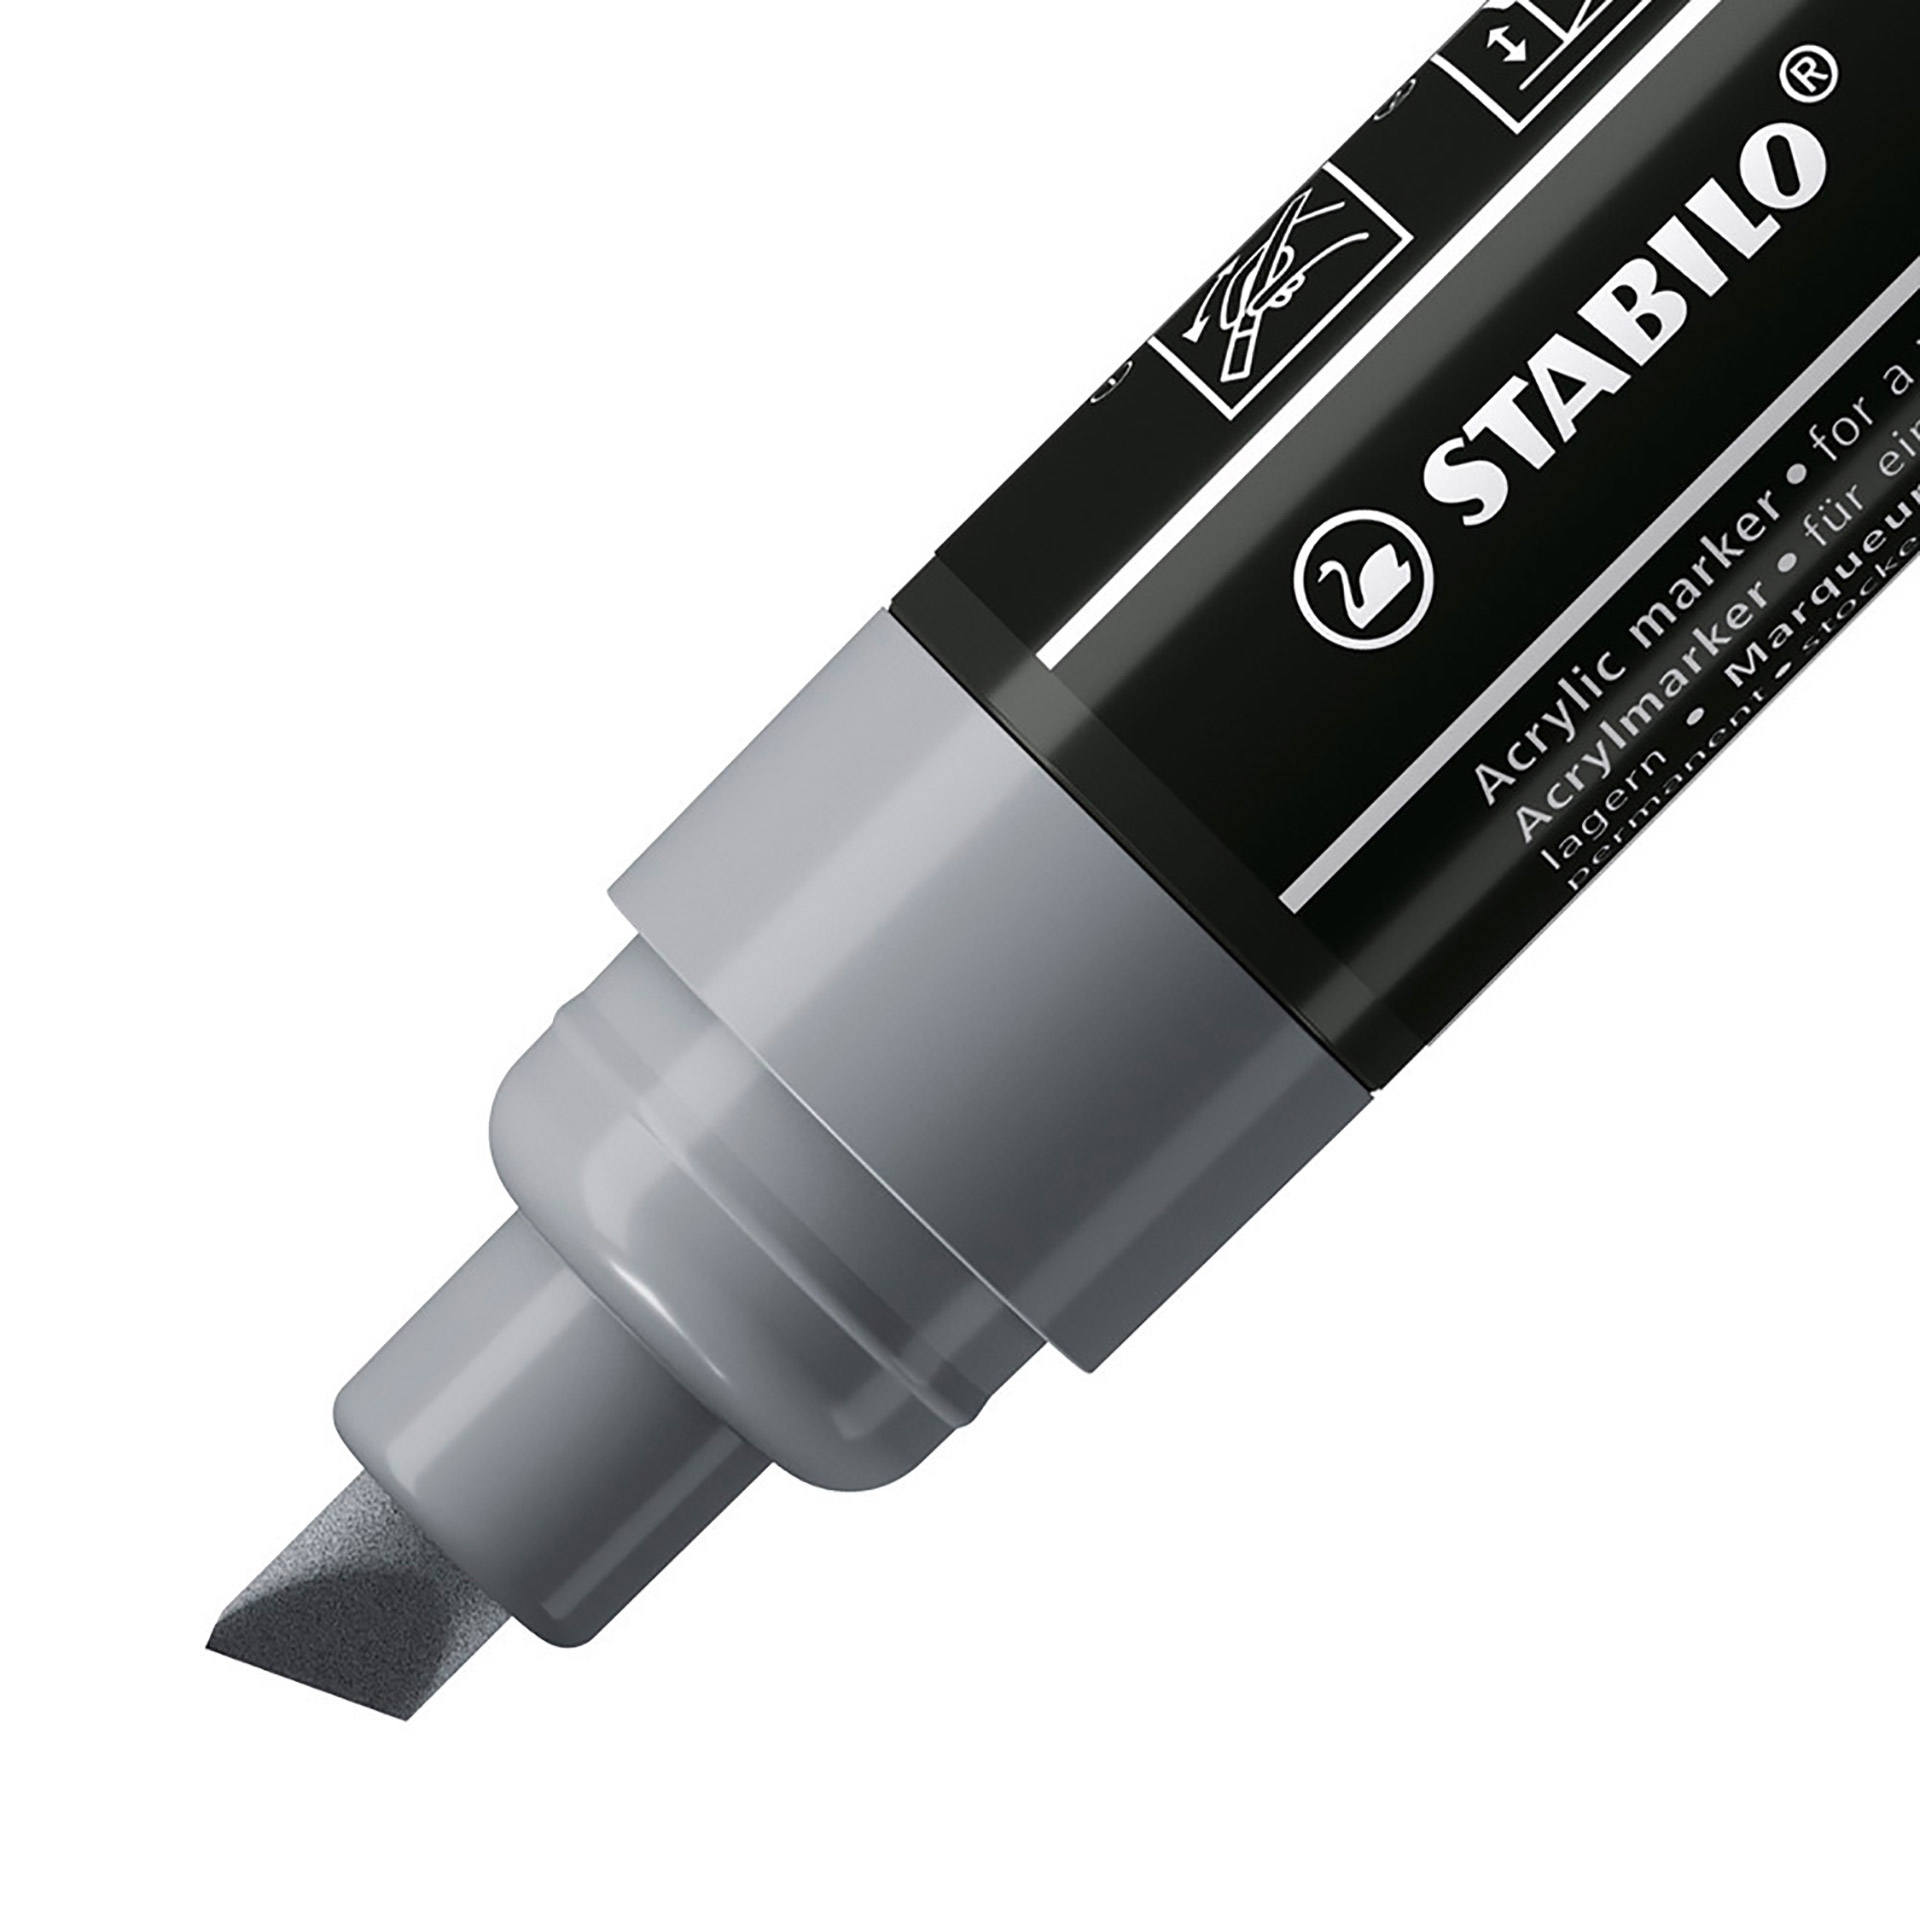 STABILO FREE Acrylic - T800C Punta a scalpello 4-10mm - Bold Edition - Astuccio, , large